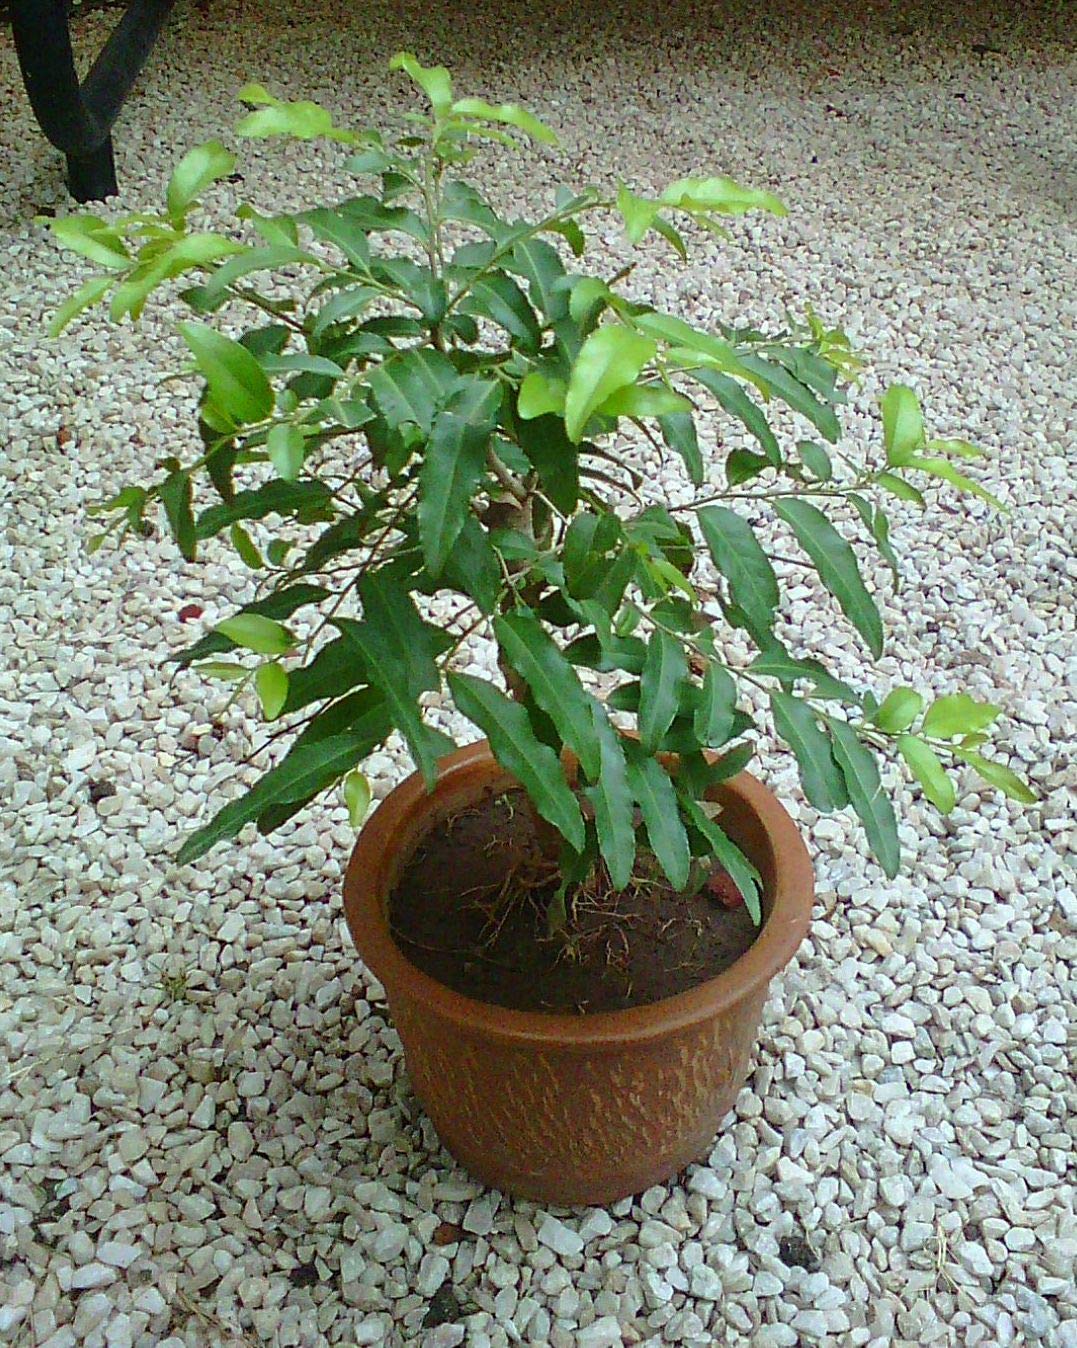 Putranjiva Live Herbal Plant Medicinal Plant Suitable for Bonsai Sapling Plant